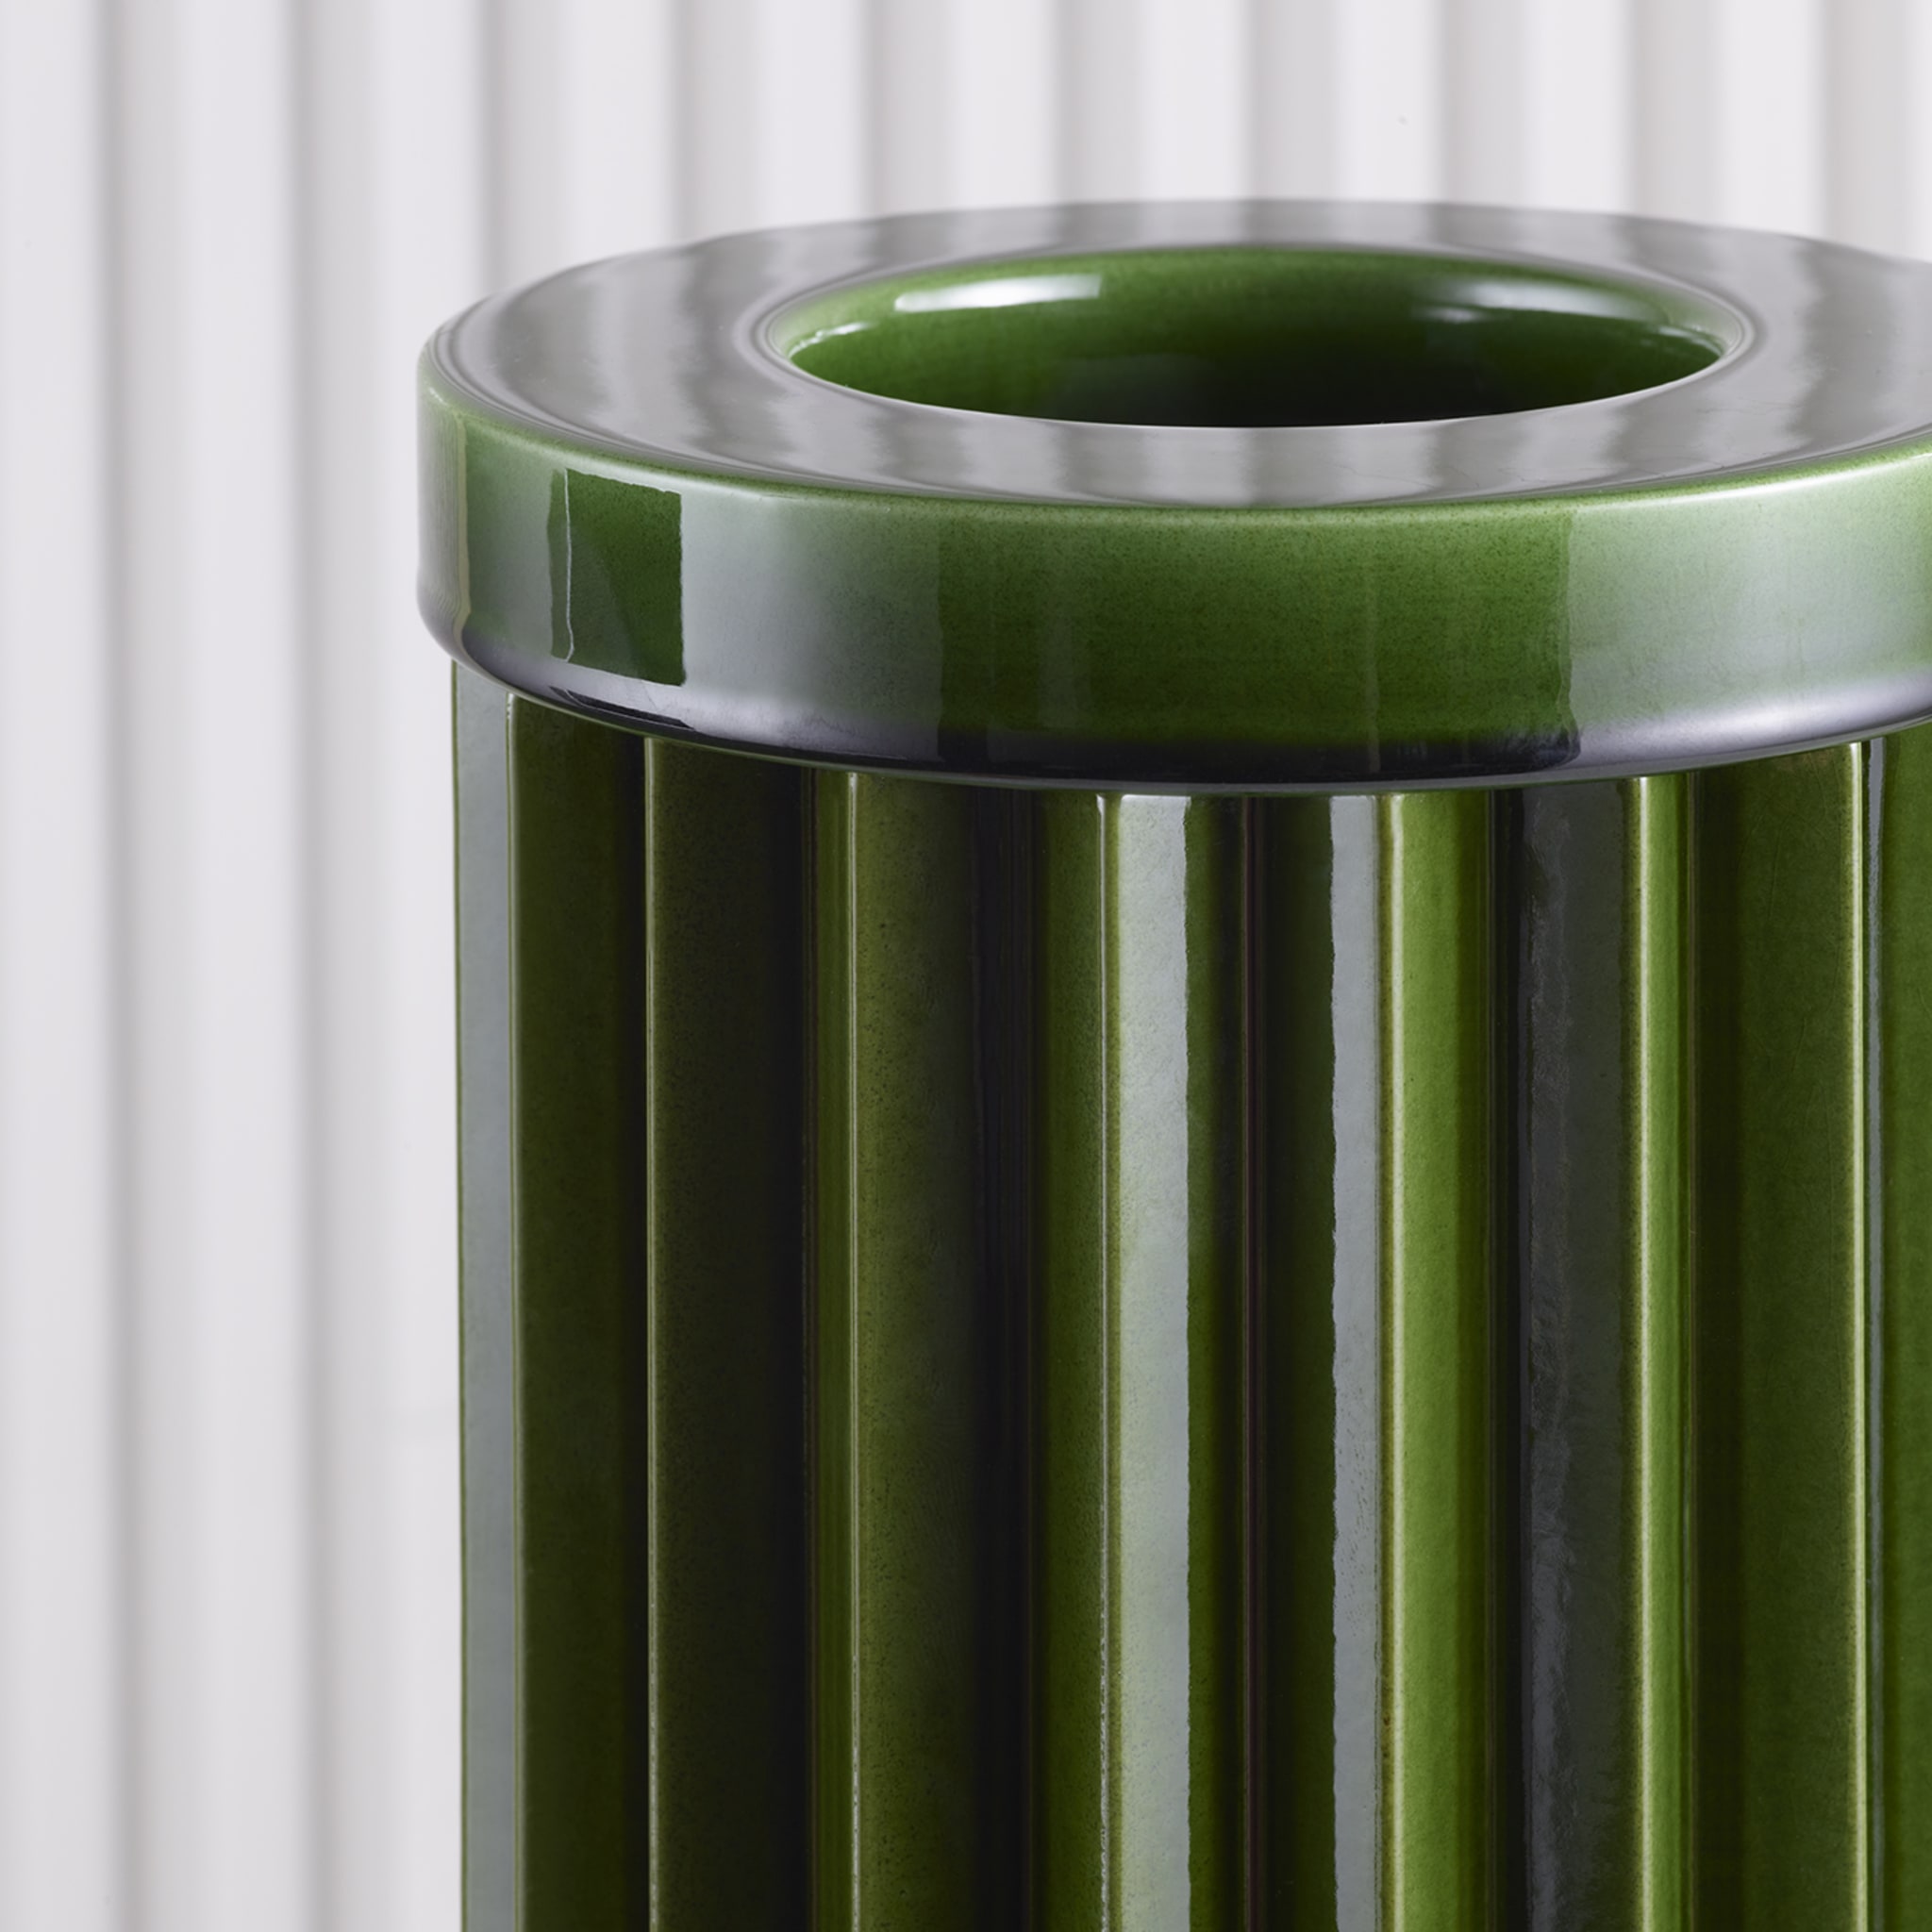 Rombini B Green Vase by Ronan & Erwan Bouroullec - Alternative view 2